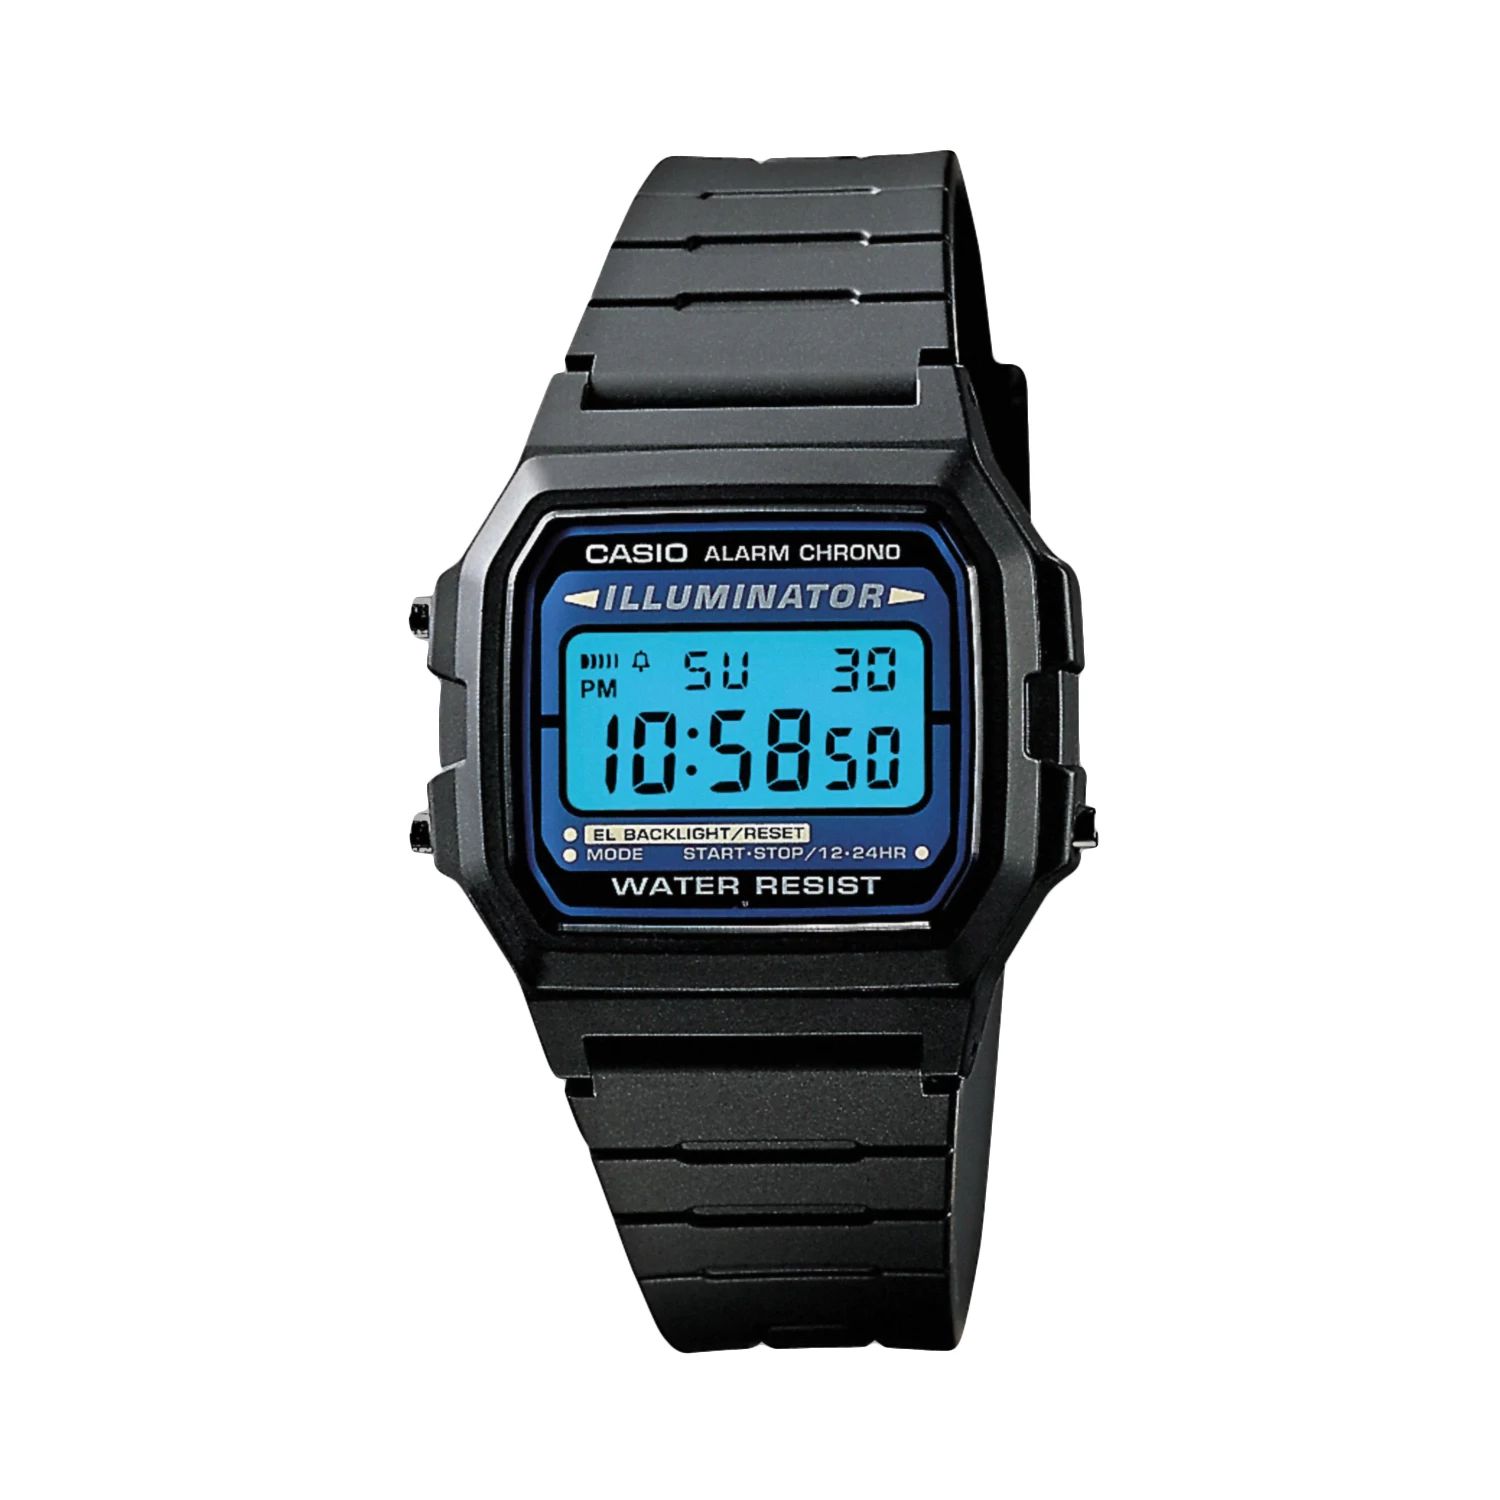 Мужские часы с цифровым хронографом и подсветкой - F105W-1A Casio цена и фото